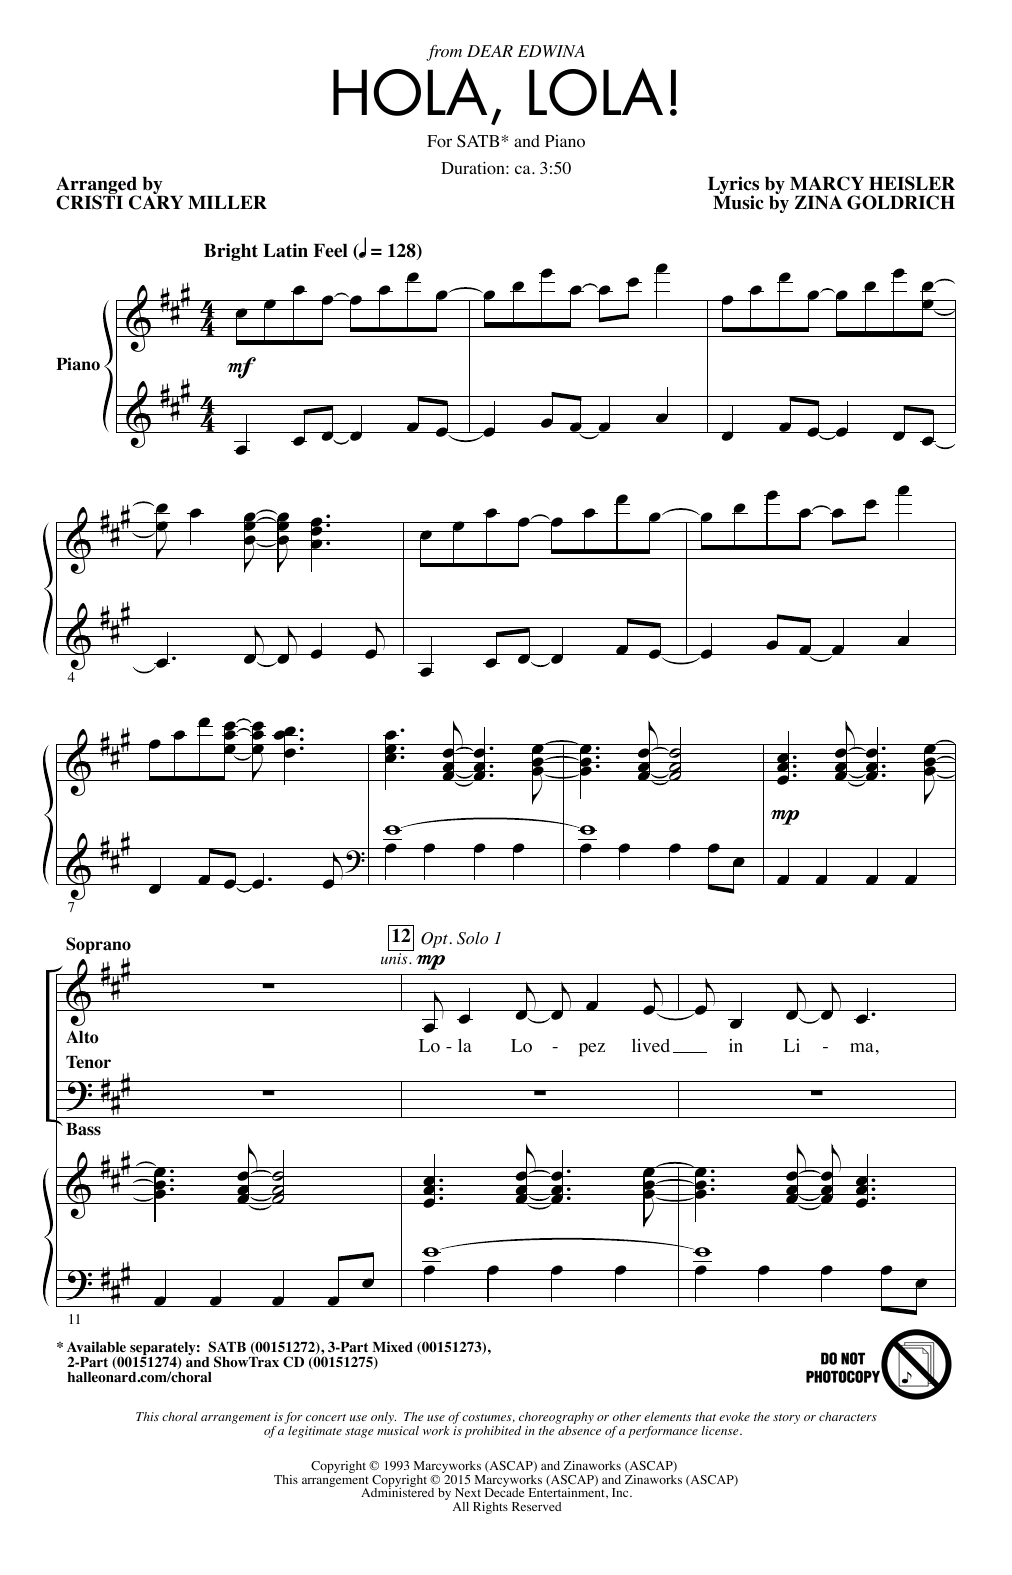 Goldrich & Heisler Hola, Lola! (arr. Cristi Cary Miller) Sheet Music Notes & Chords for 2-Part Choir - Download or Print PDF